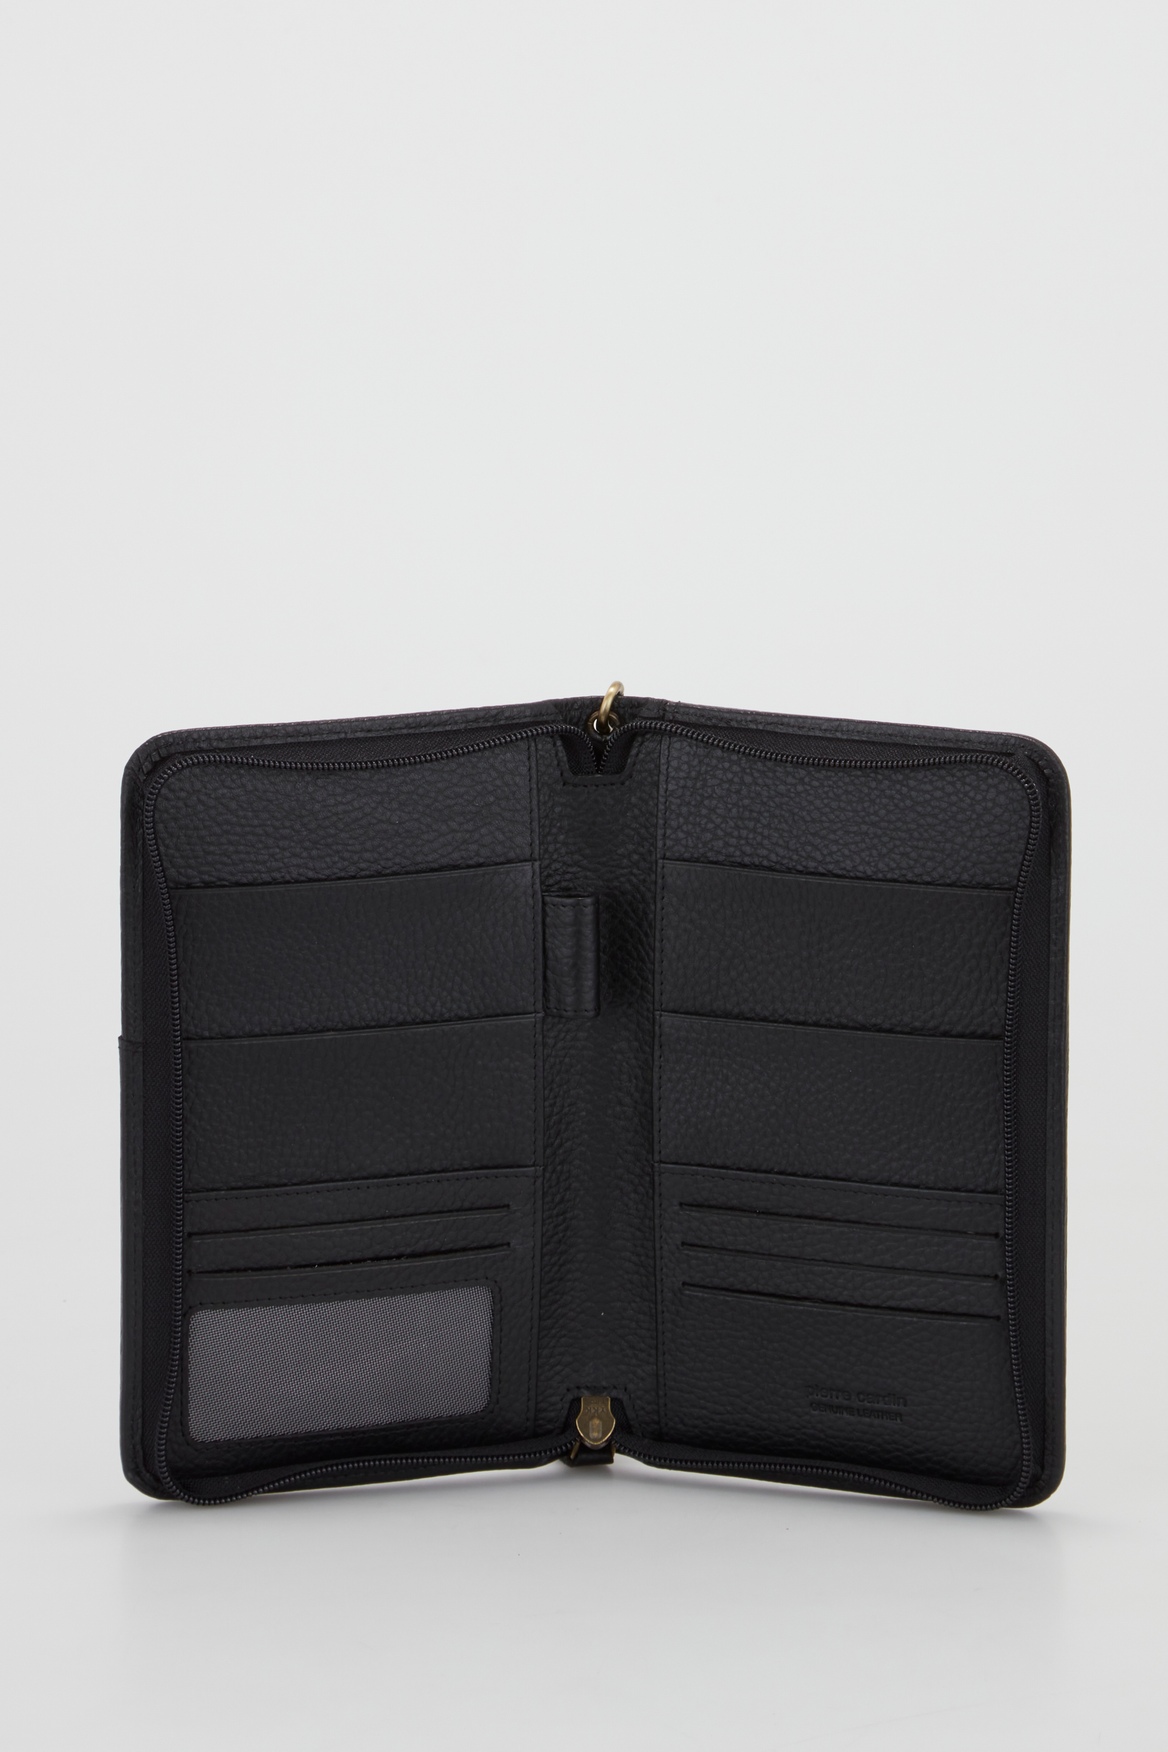 Pierre Cardin Leather Travel Wallet – Strandbags Australia